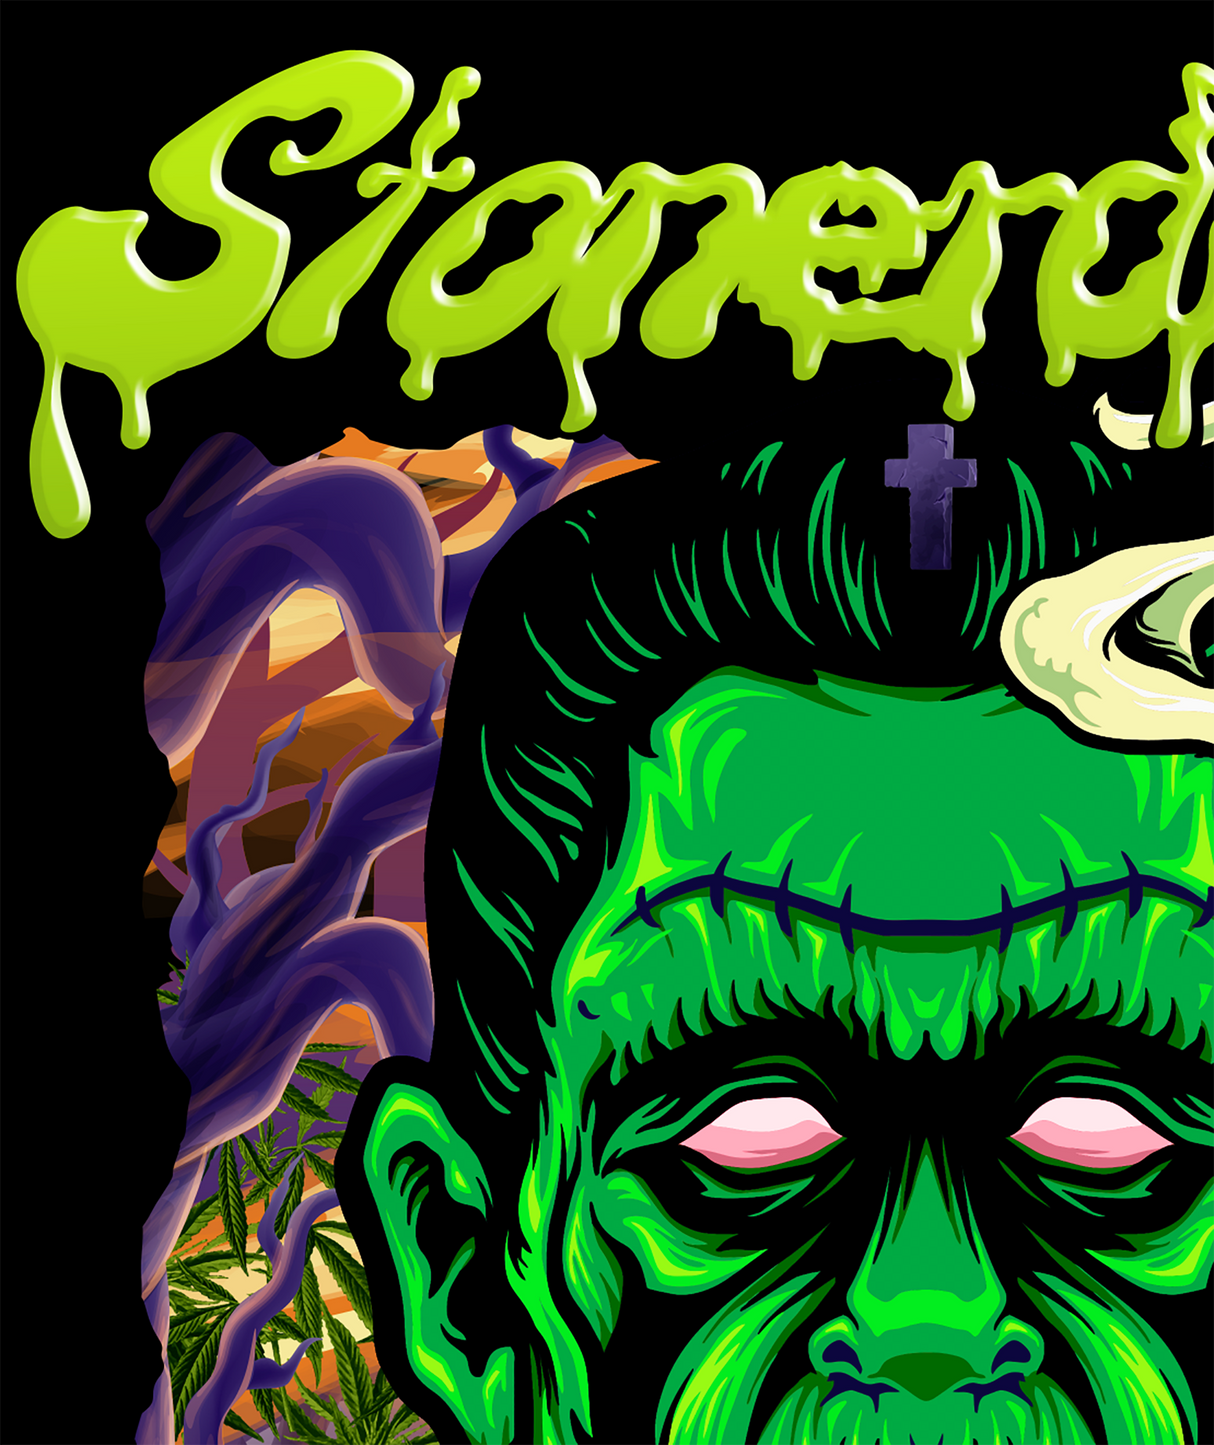 StonerDays Dankenstein Black Crewneck XXL-XXXL with vibrant green graphic